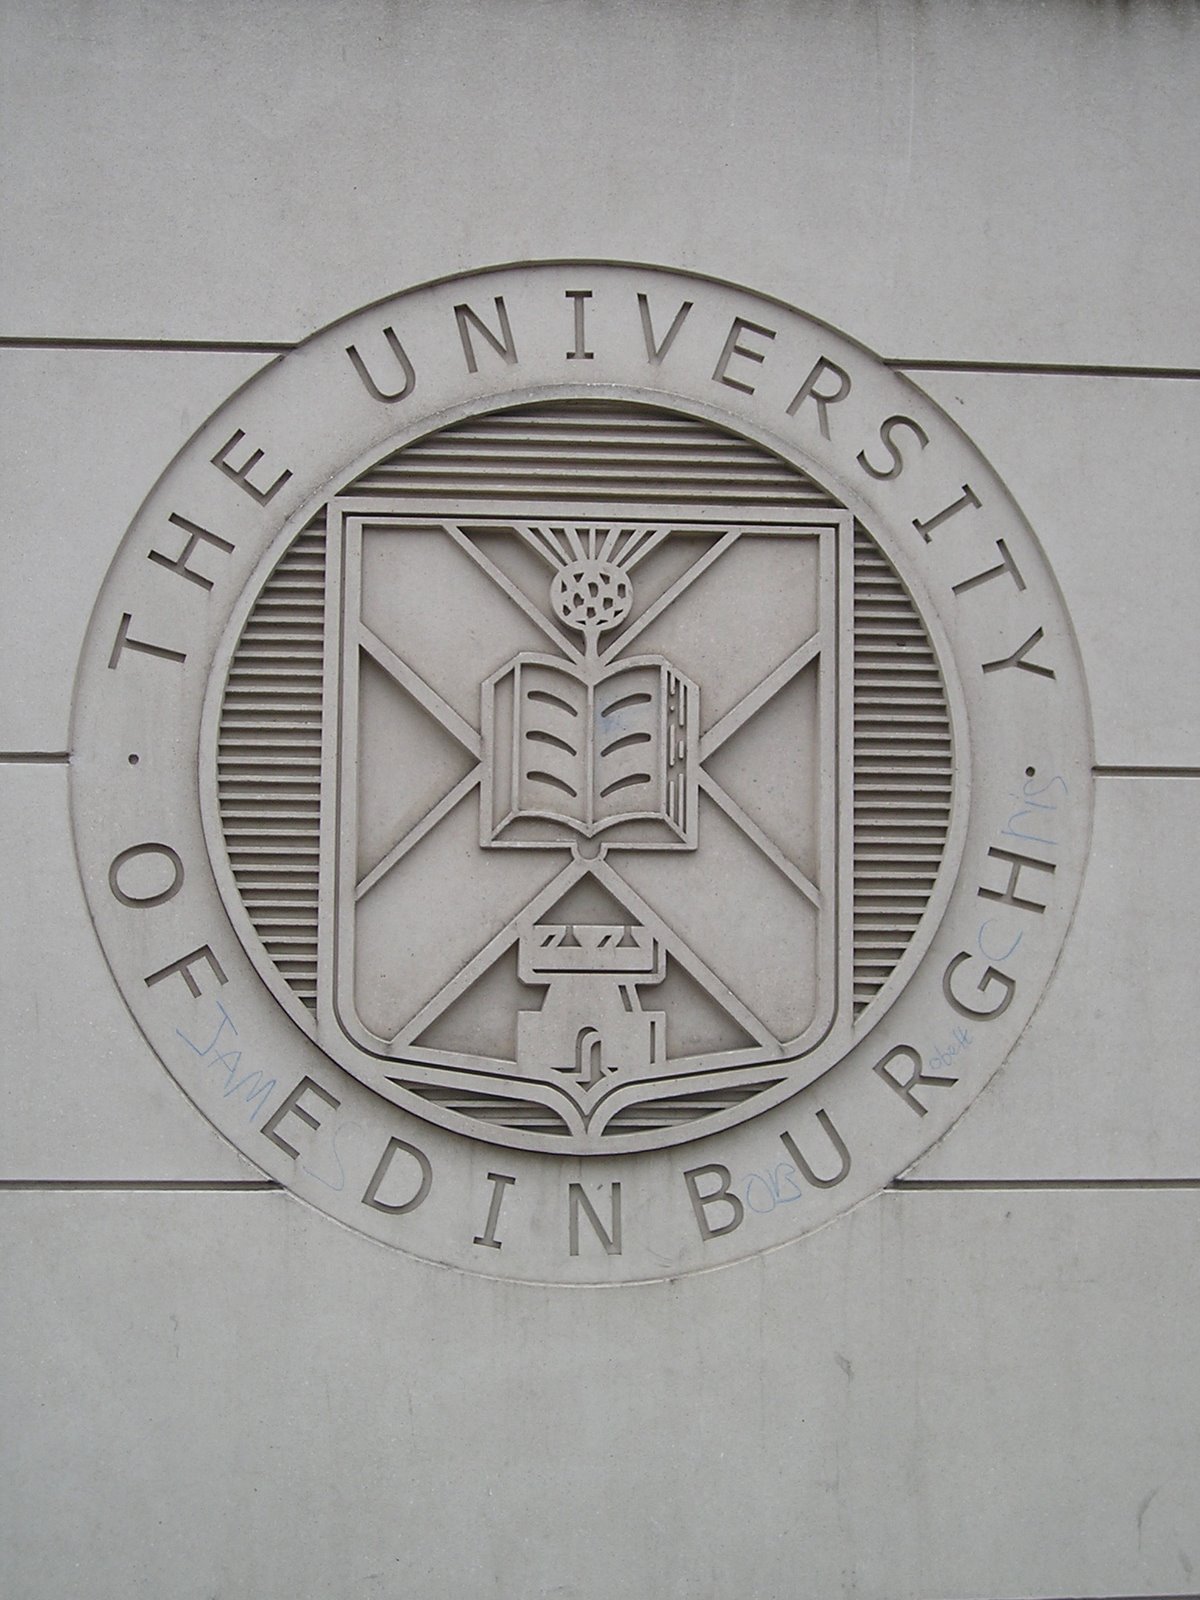 [University_of_Edinburgh_coat_of_arms.jpg]